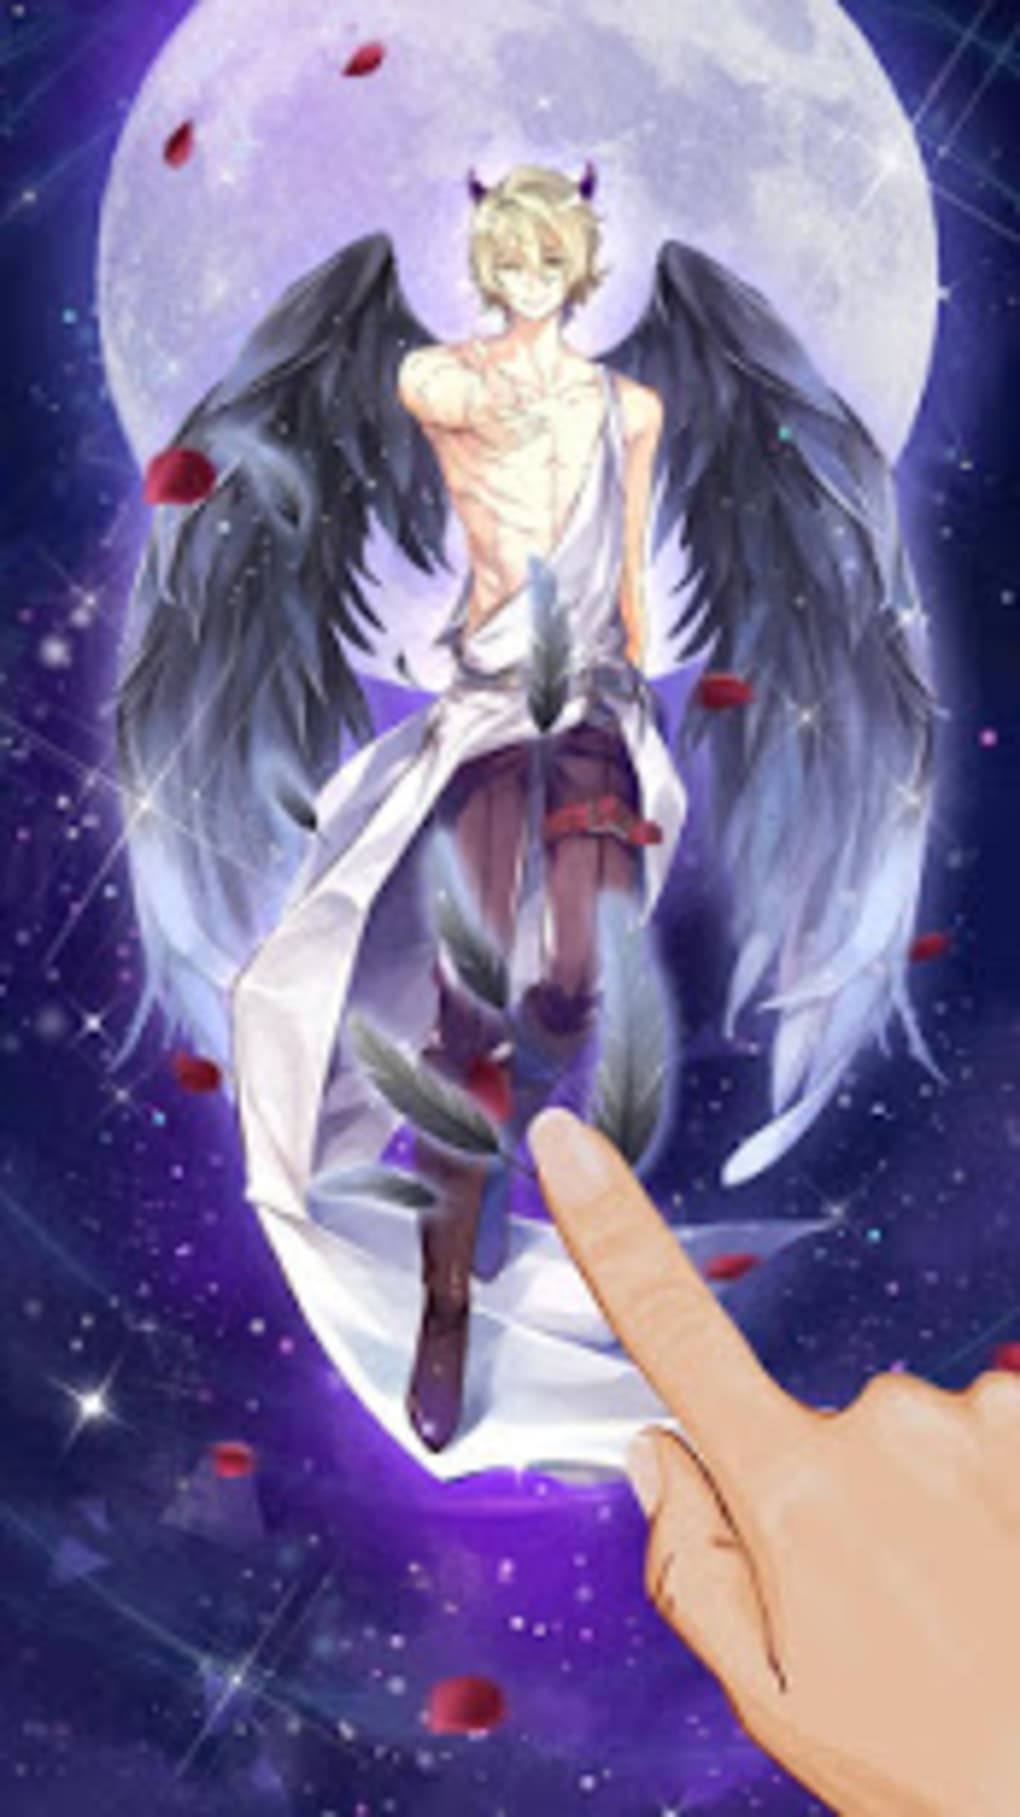 Download do APK de Anime Demónio do anjo papel de parede ao vivo para  Android